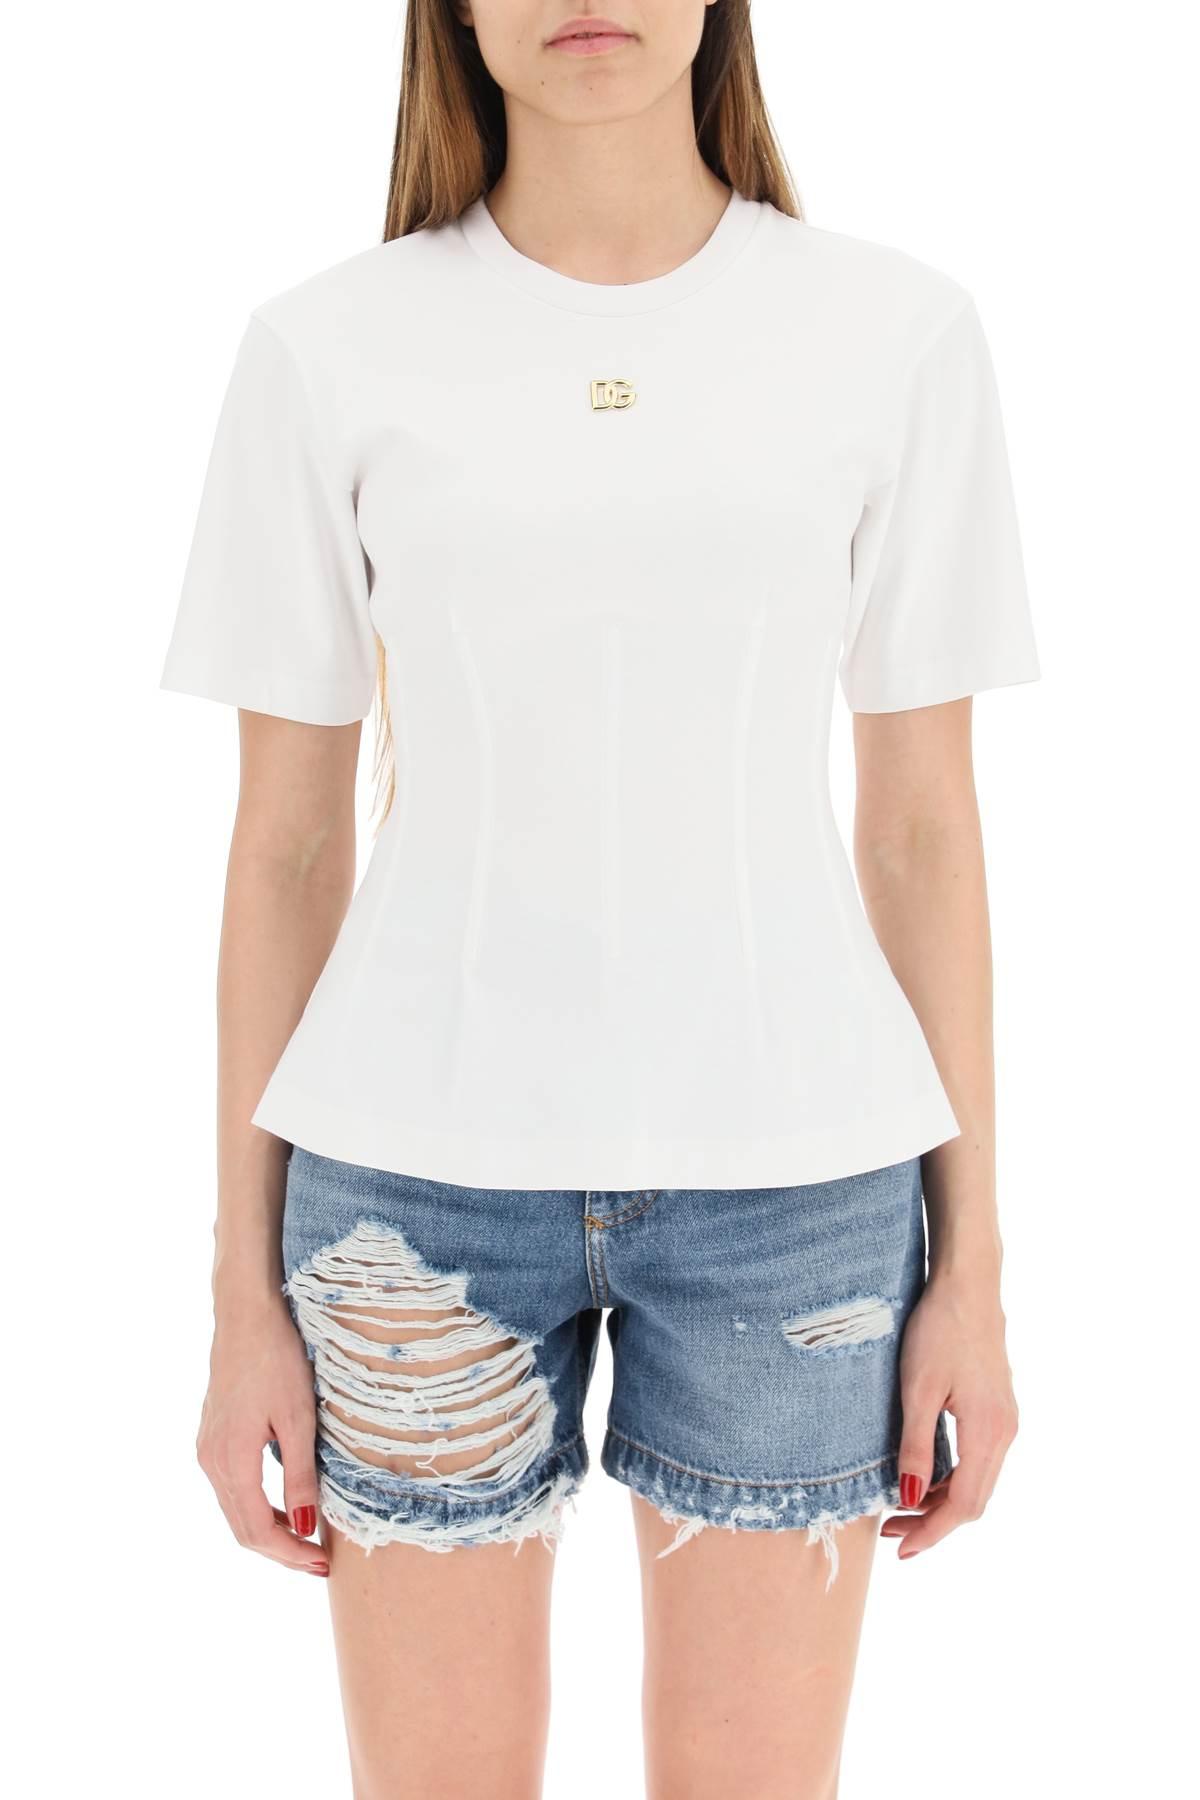 Dolce & Gabbana Cotton Logo Bustier T-shirt in White - Save 37% | Lyst